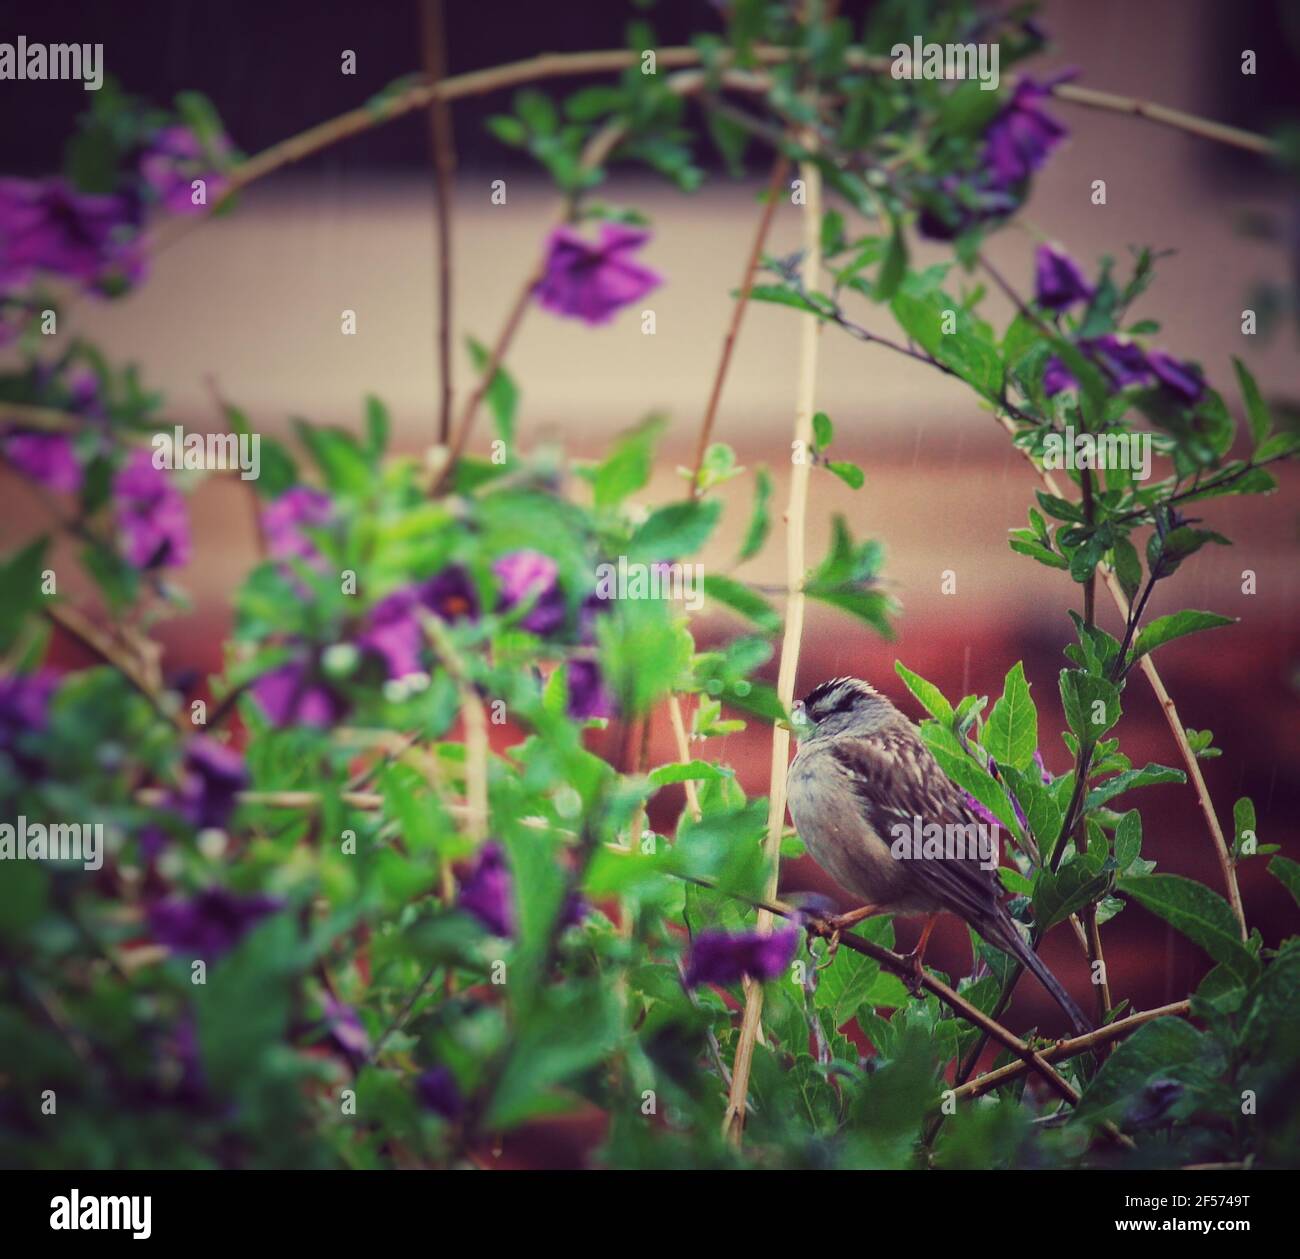 A bird in a flowery bush on a rainy day Stock Photo